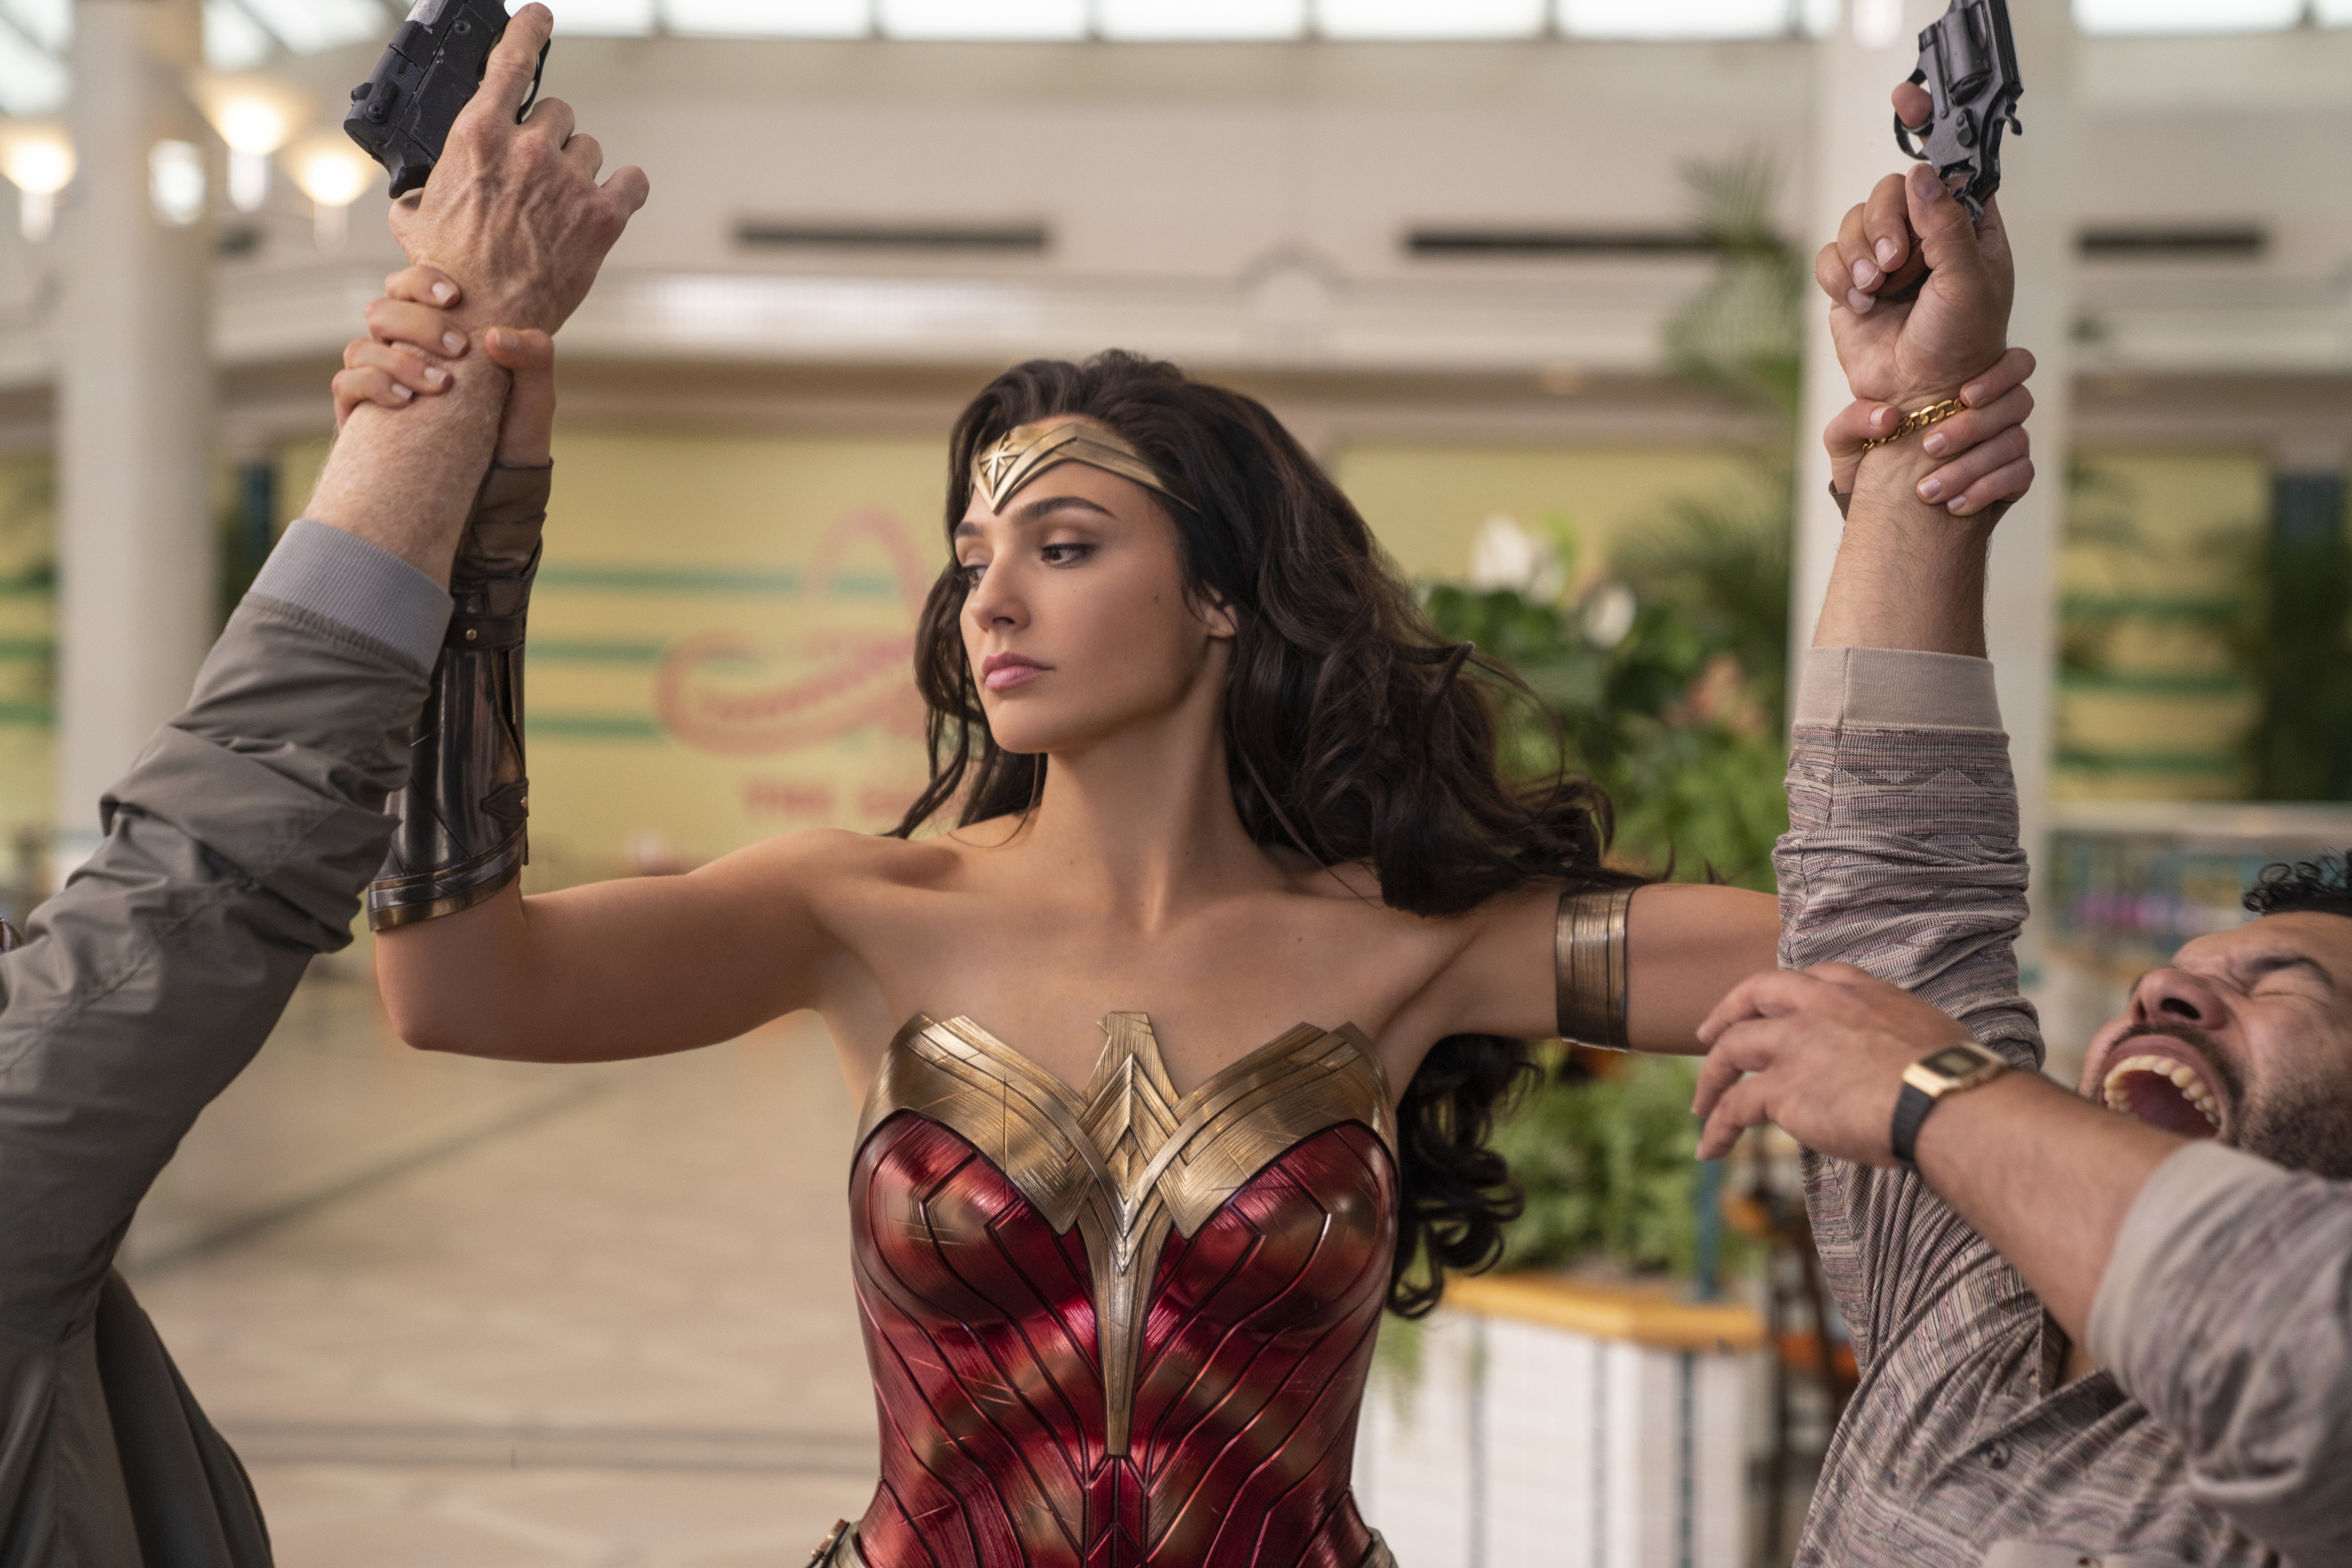 Gal Gadot Developing Wonder Woman 3 With James Gunn, Peter Safran  (Exclusive)